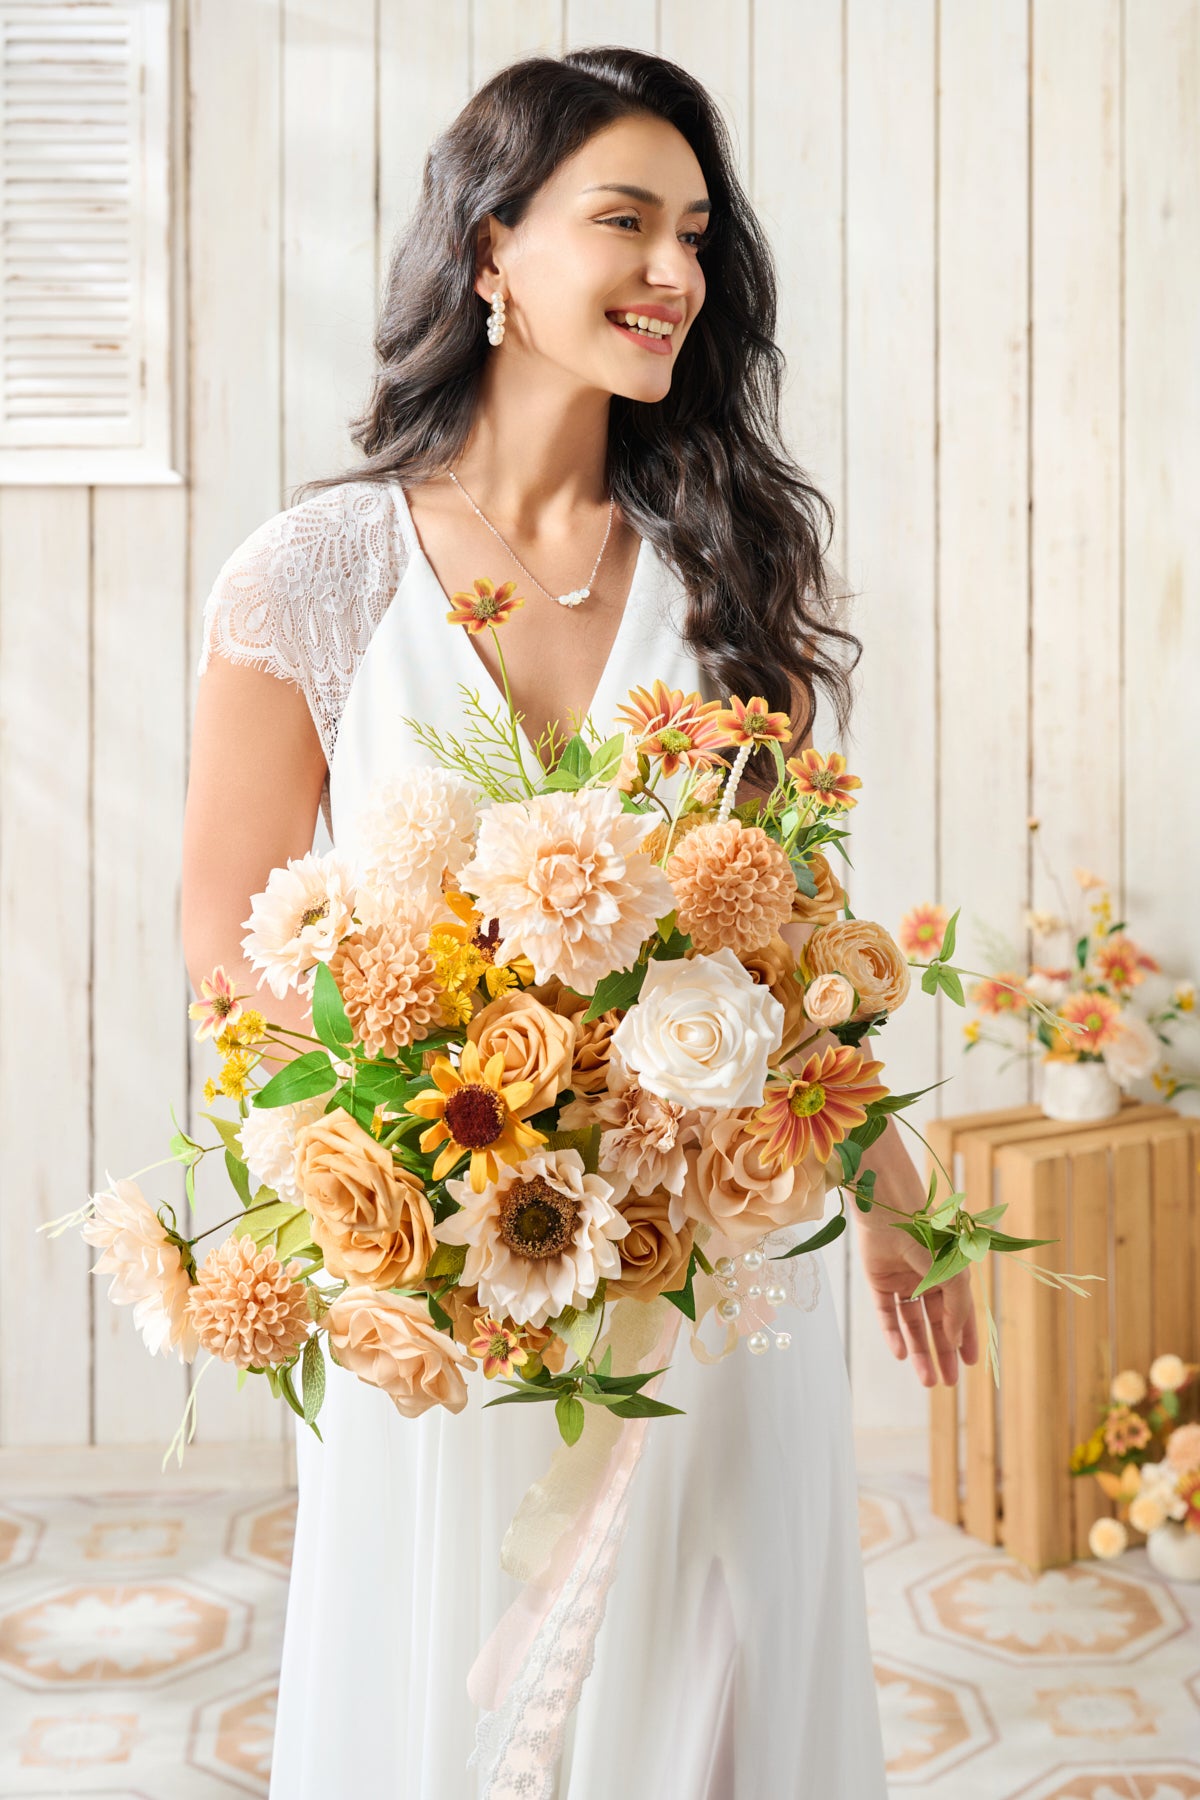 Medium Free-Form Bridal Bouquet in Sunflower & Peach